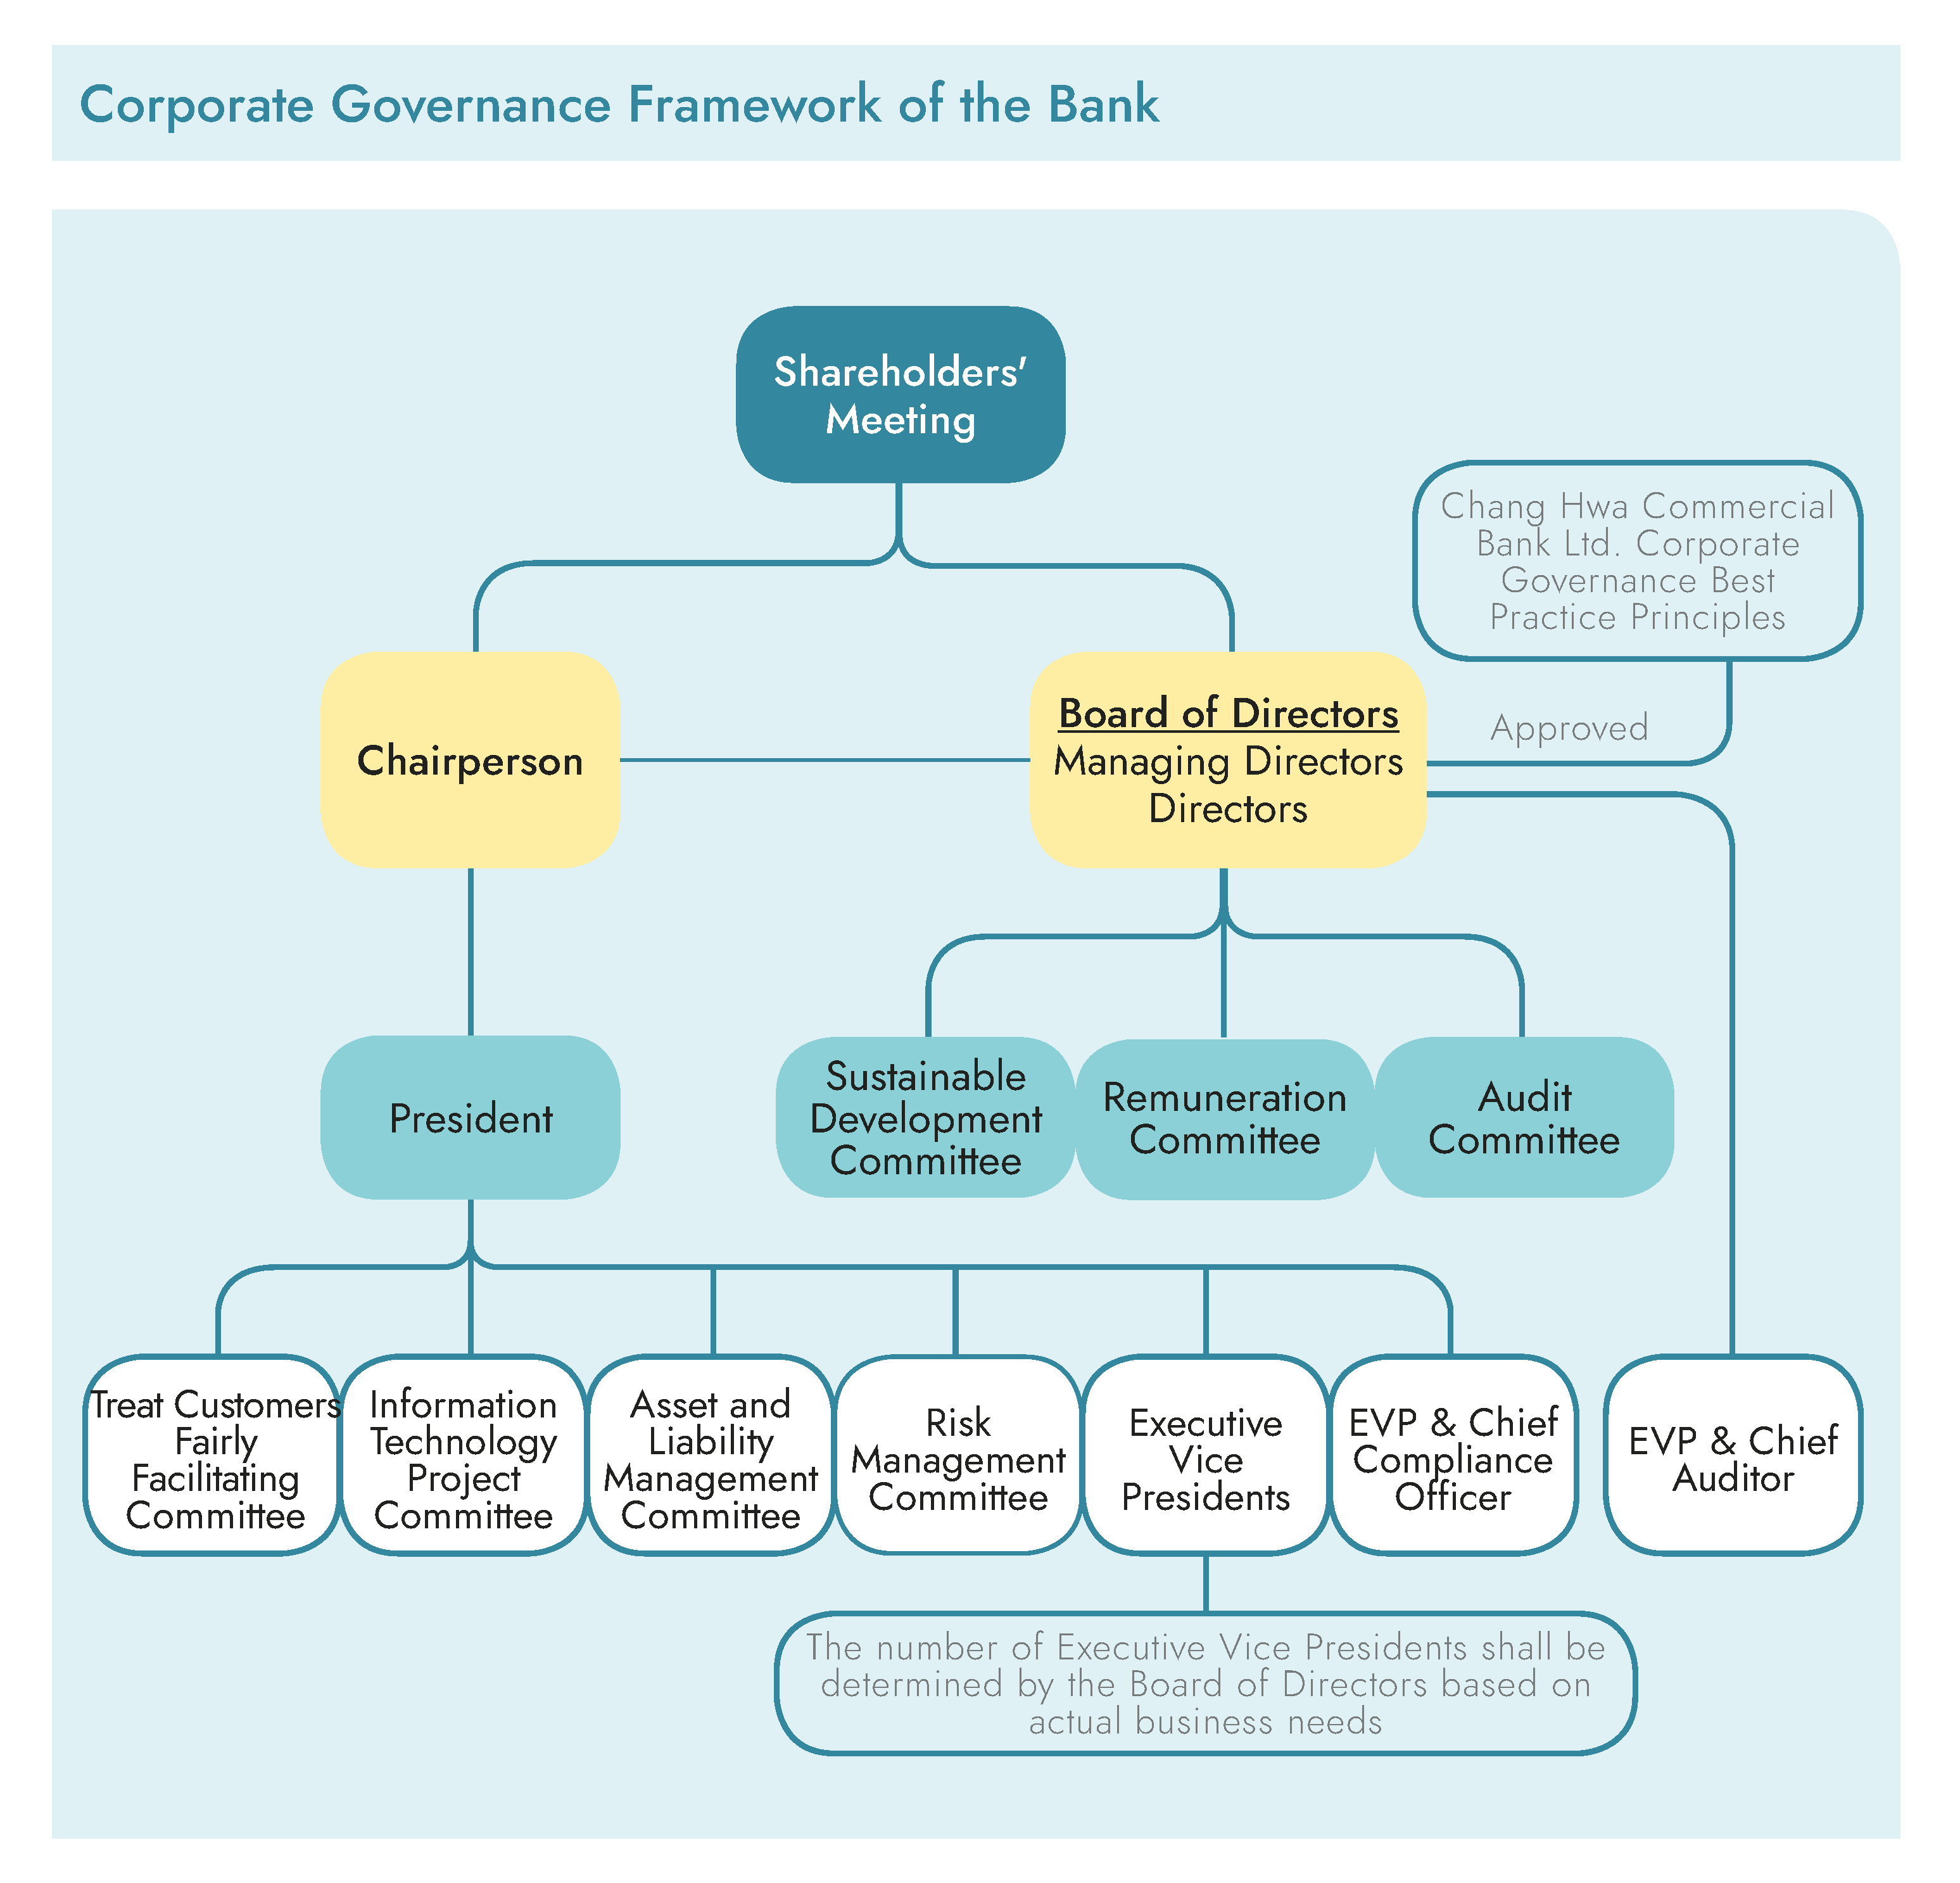 Corporate Governance Framework of the Bank